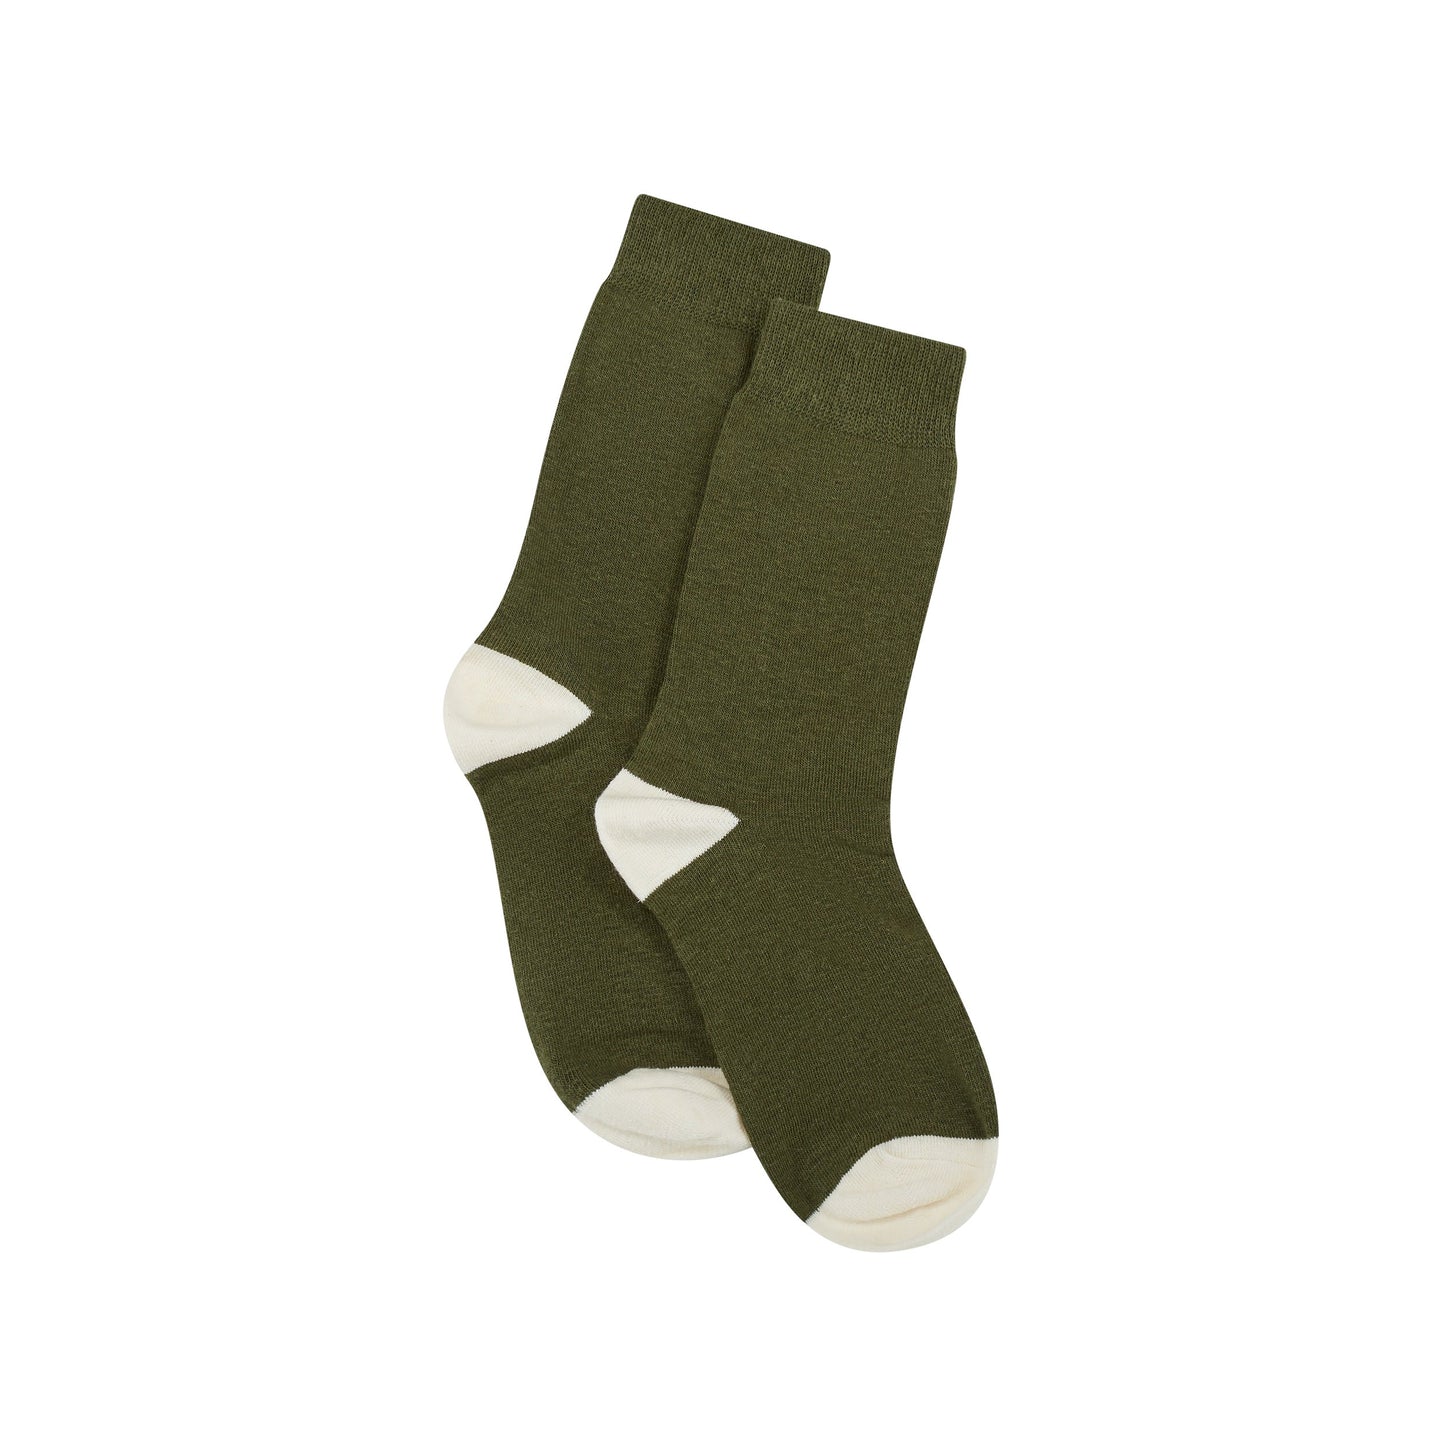 Hemp Clothing Australia Daily Socks - Olive